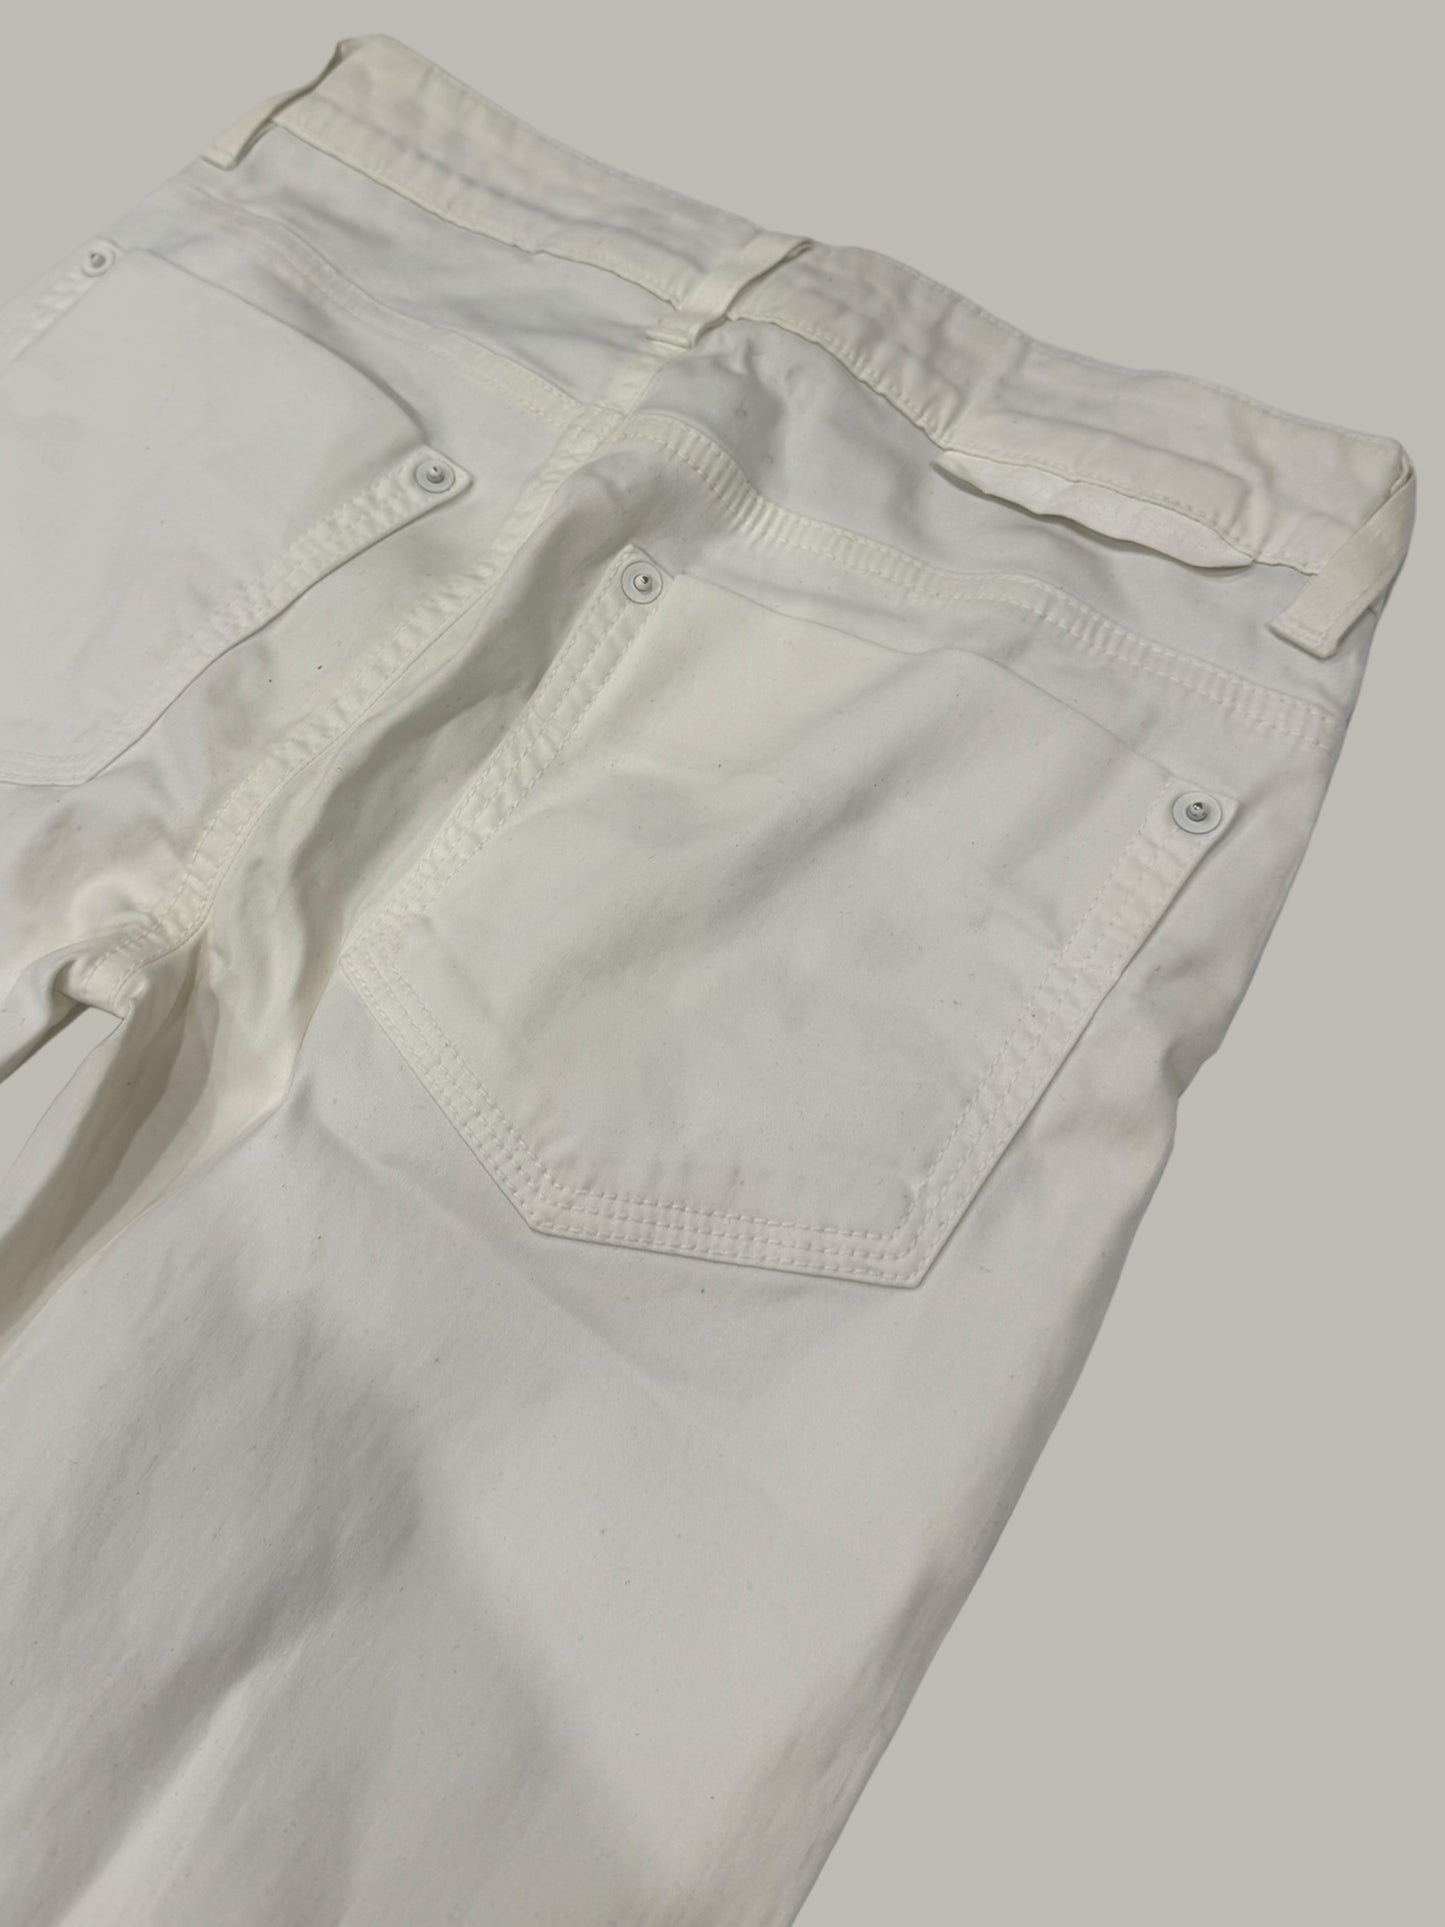 STELLA MCCARTNEY white pants size 25